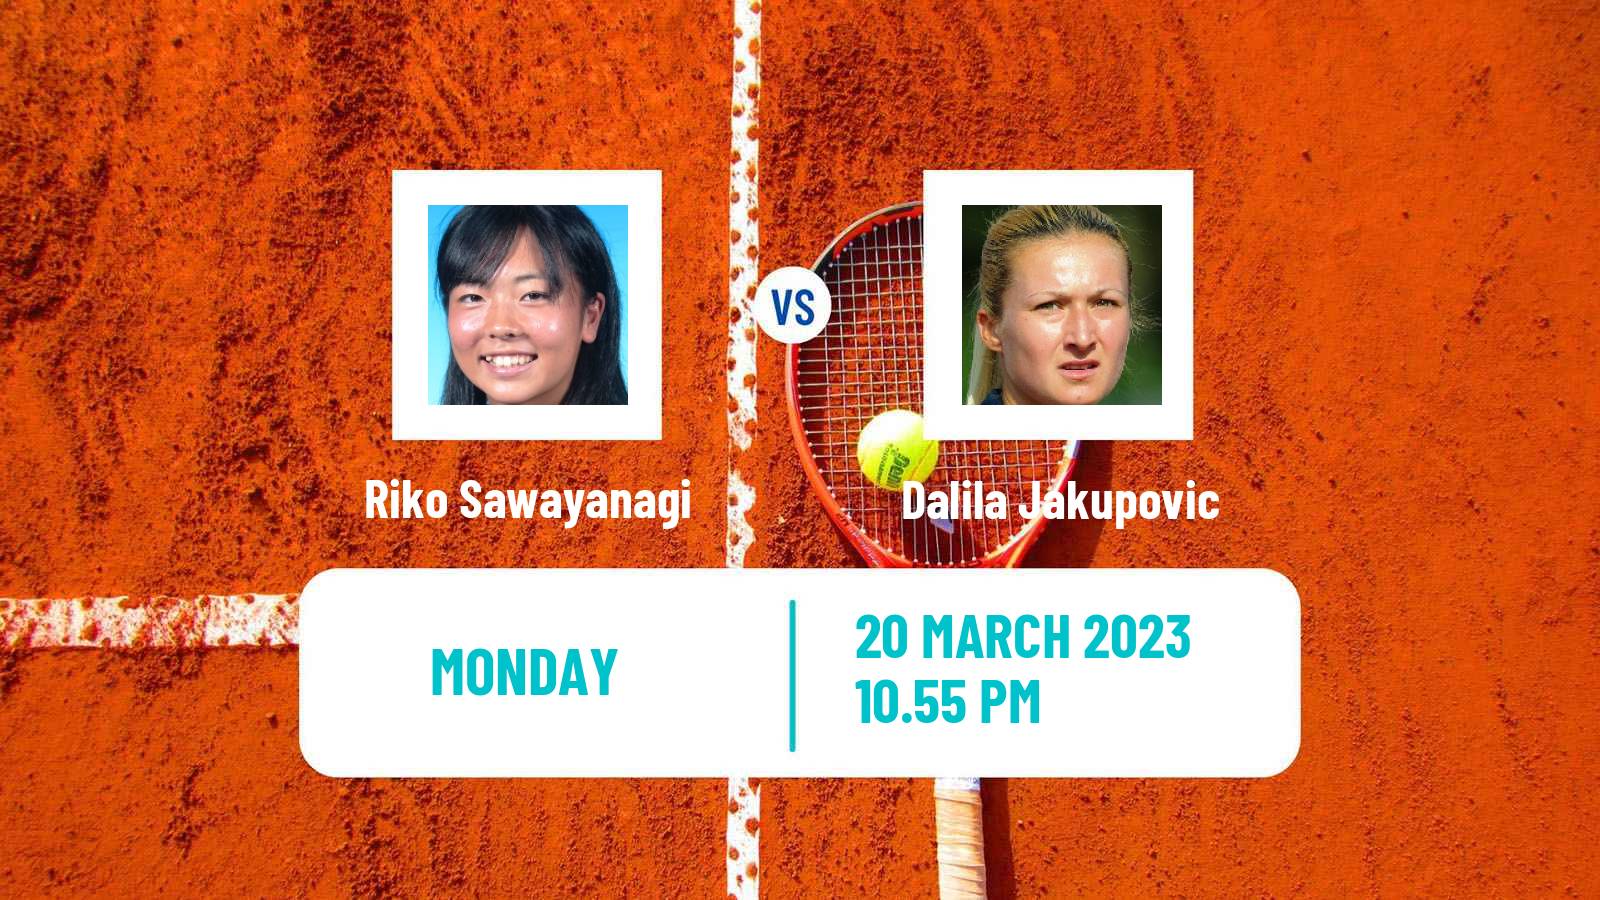 Tennis ITF Tournaments Riko Sawayanagi - Dalila Jakupovic